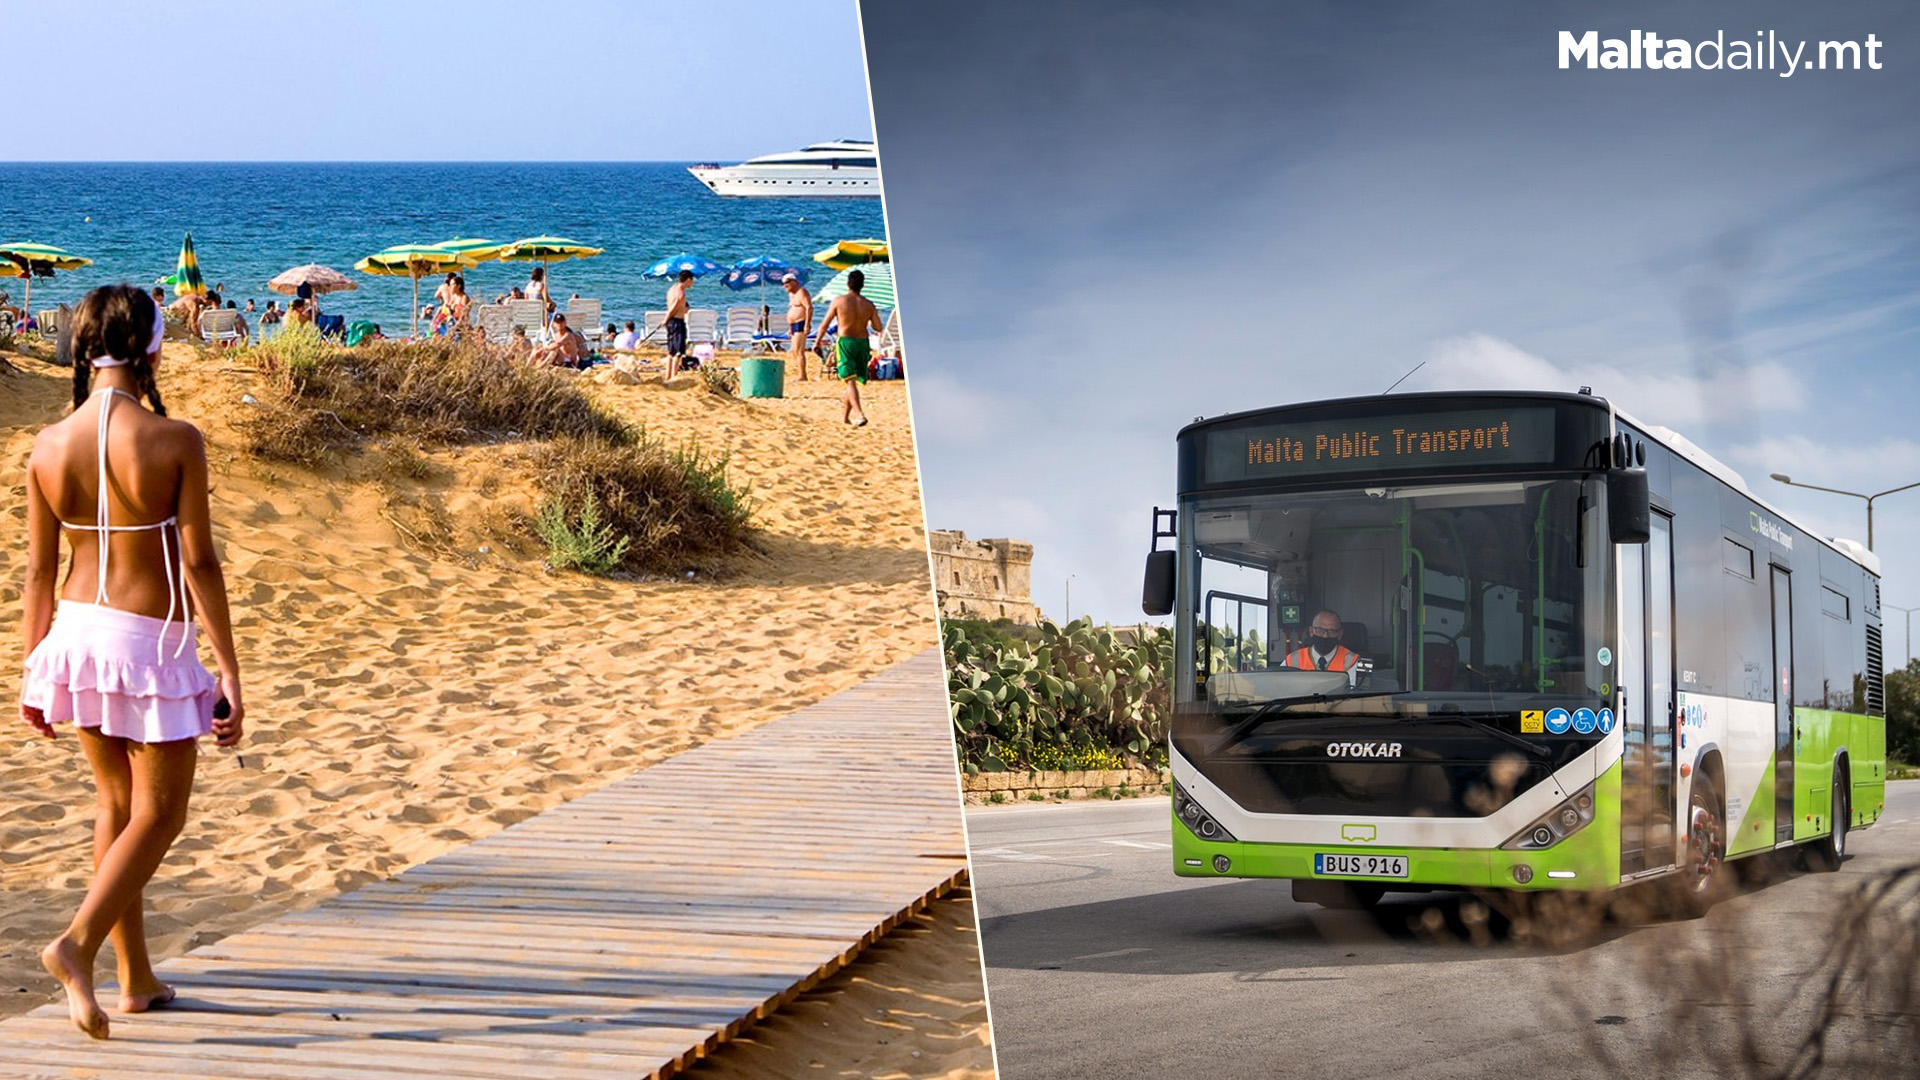 Tallinja Extend Summer Routes To Maltese Beaches